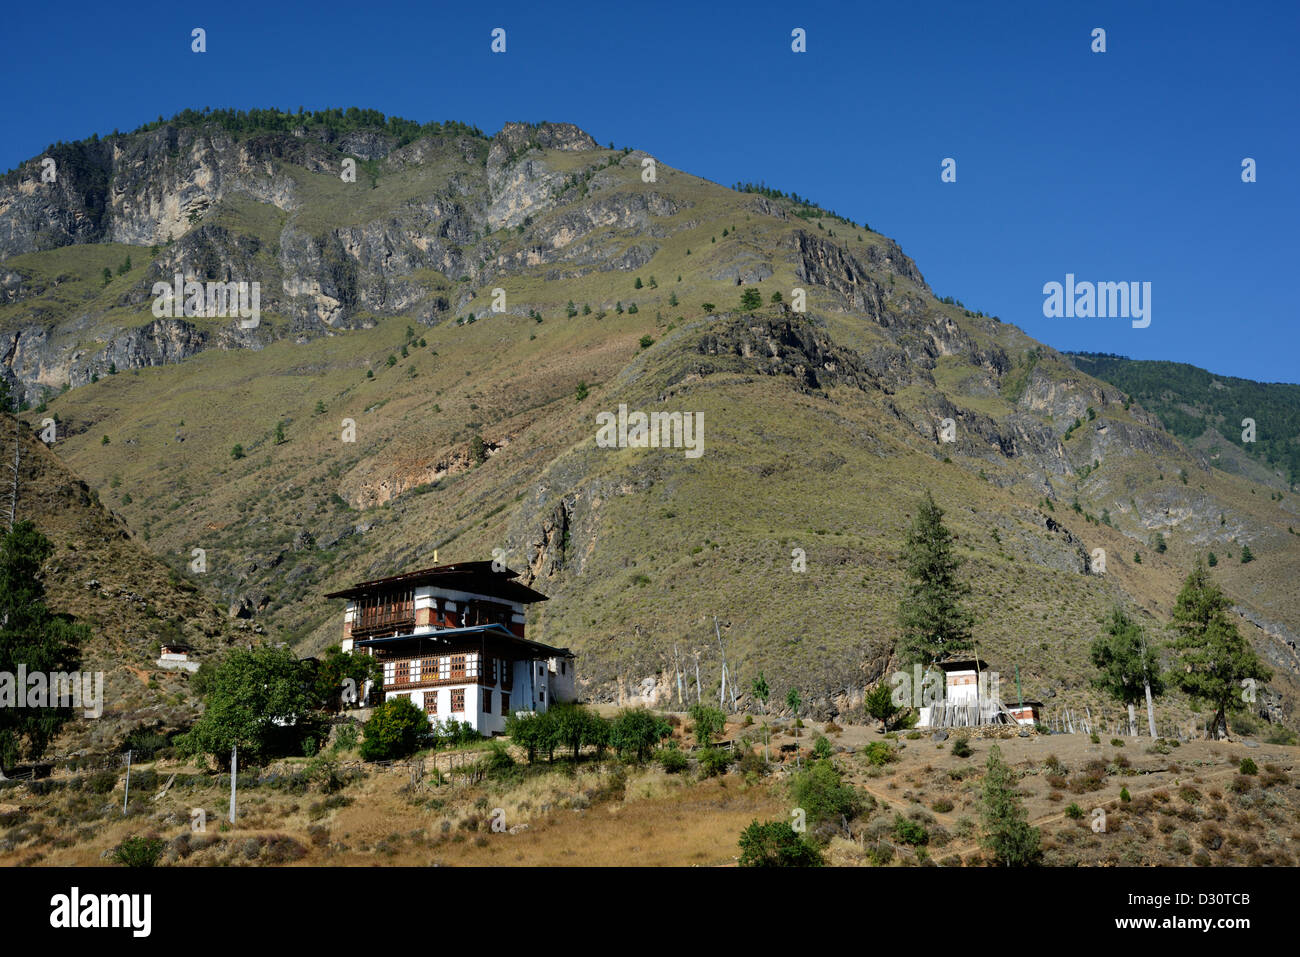 Bhutan-Tempel, Tachog Lhakhang, mit Berg in Ferne, 36MPX, HI-RES Stockfoto